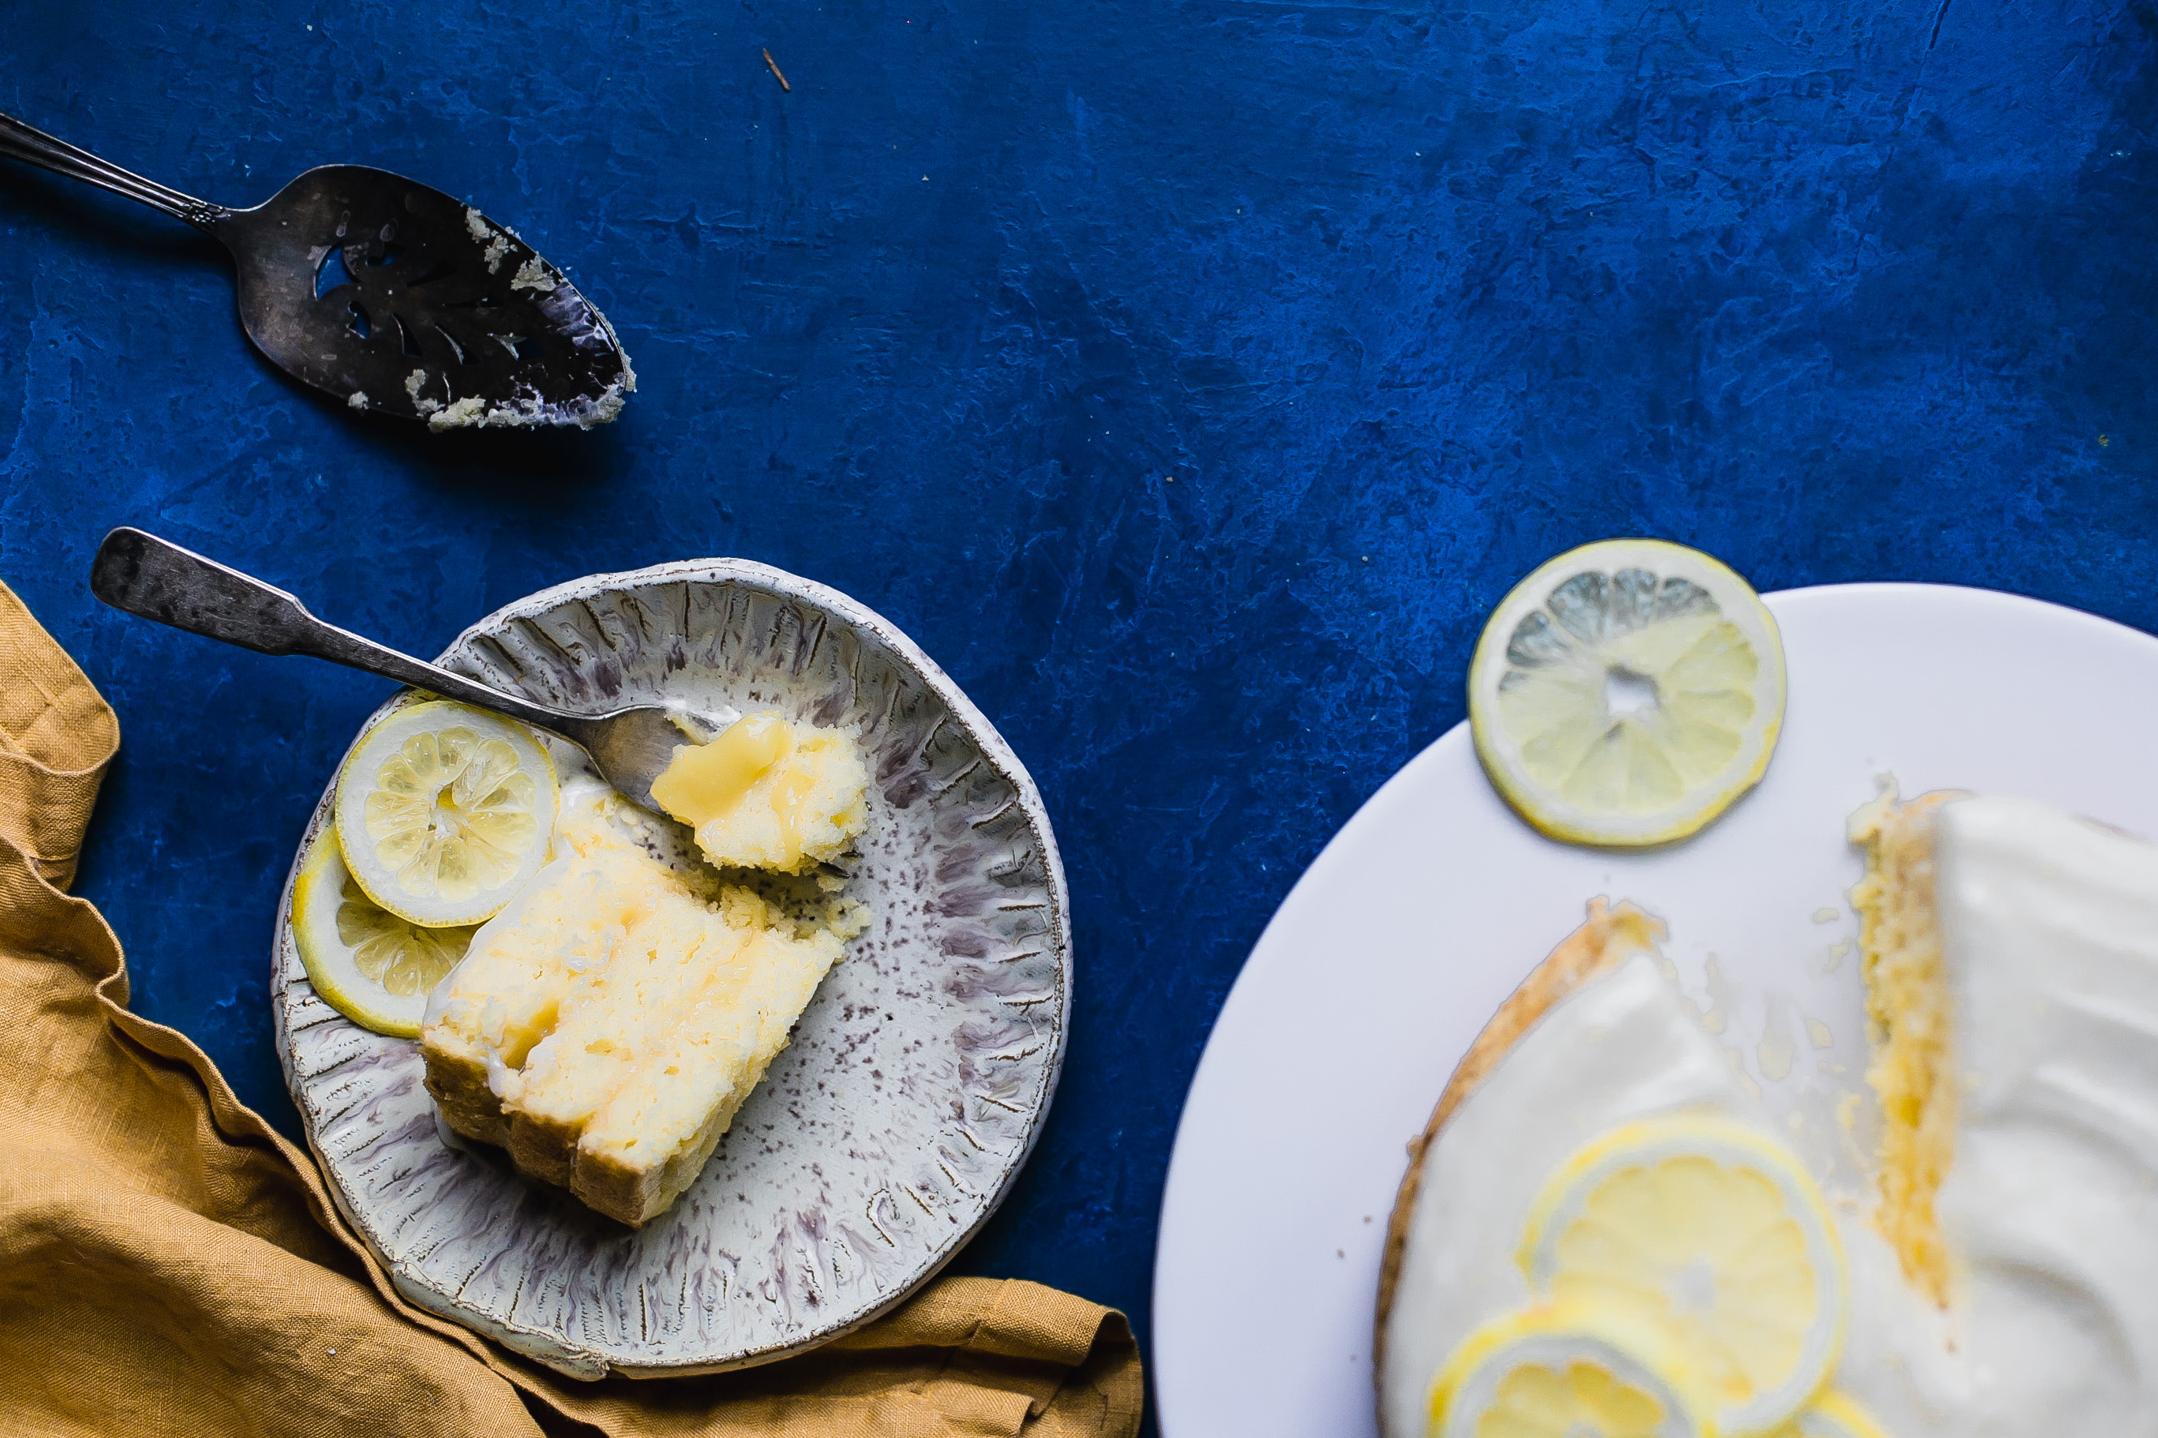  Let your taste buds take a ride on a zesty lemon journey.